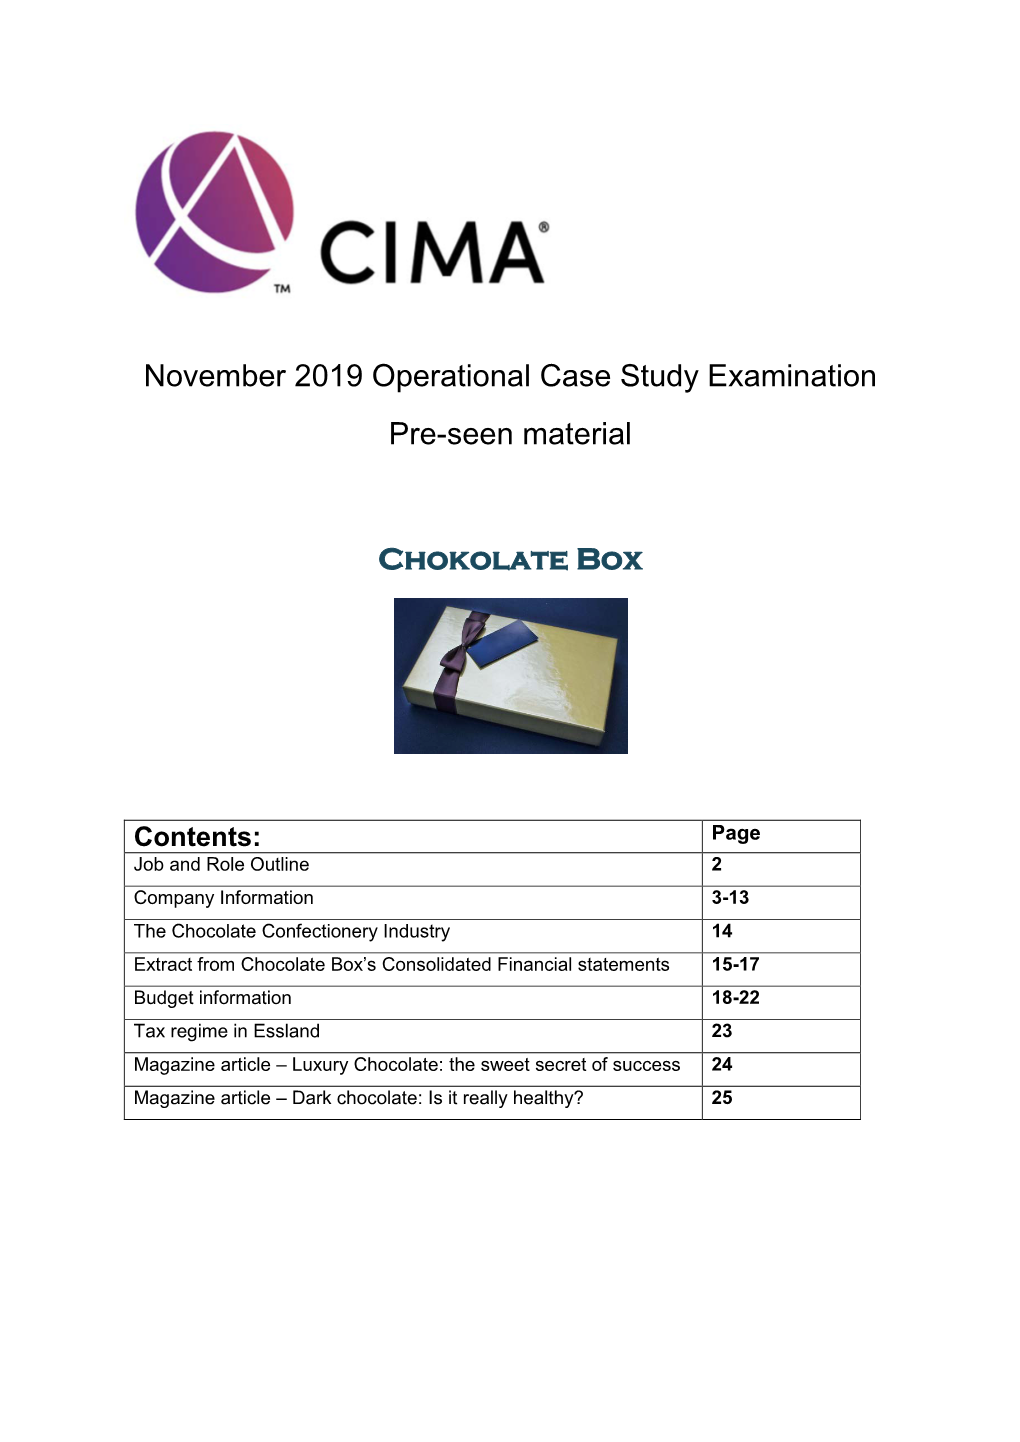 November 2019 Operational Case Study Examination Pre-Seen Material